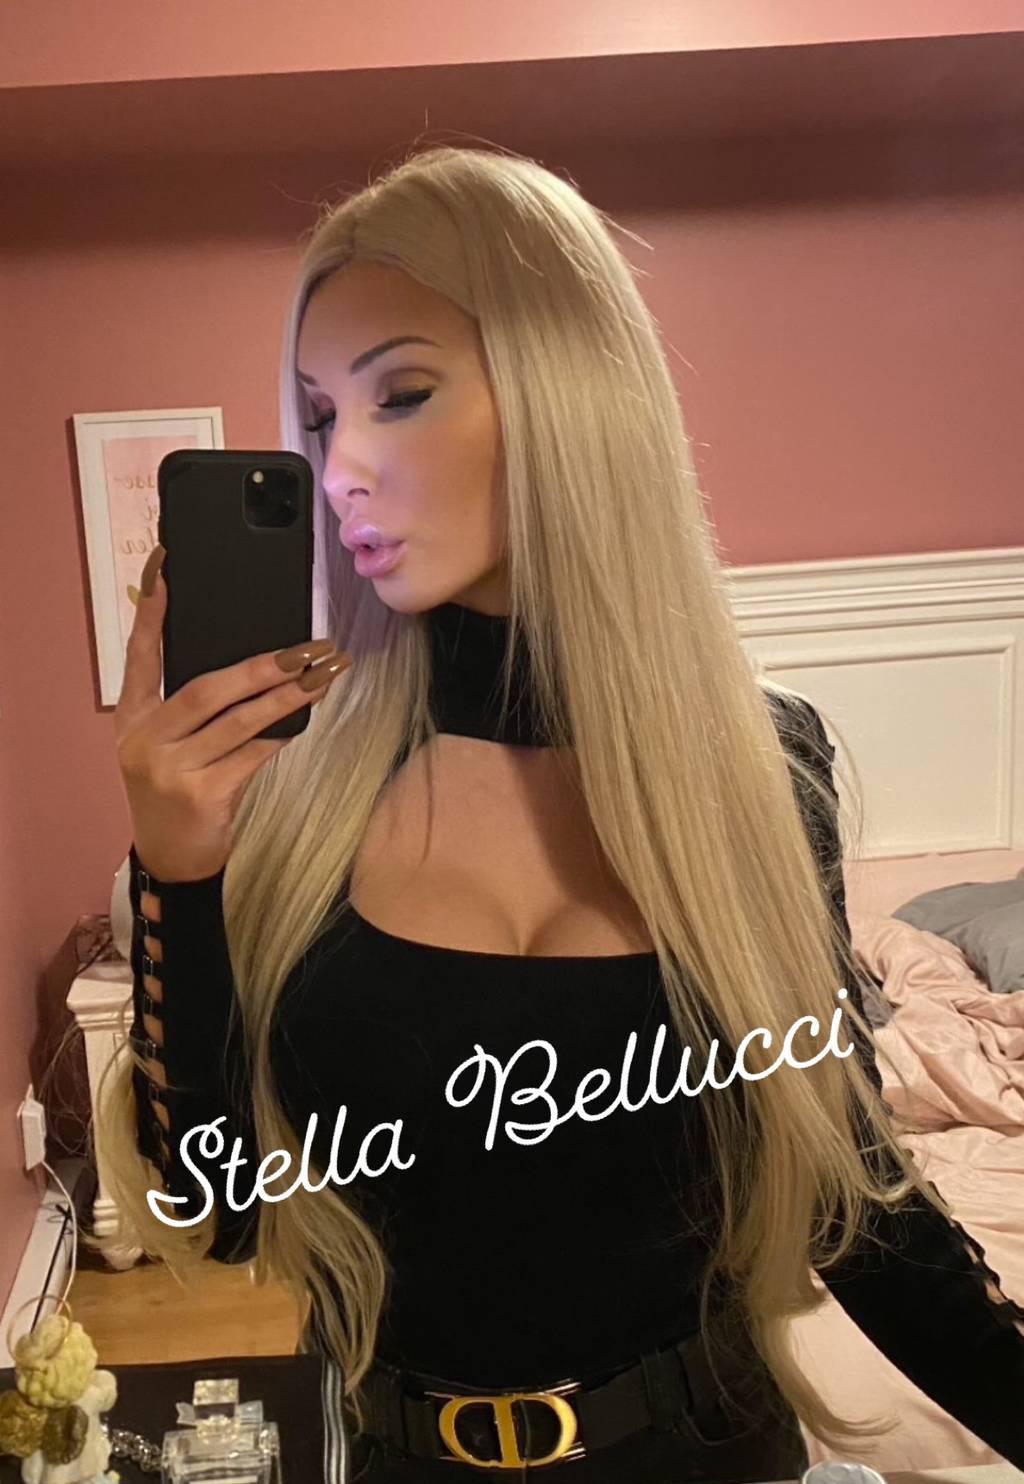 post-op transgender doll Pornstar stella bellucciOTTAWA